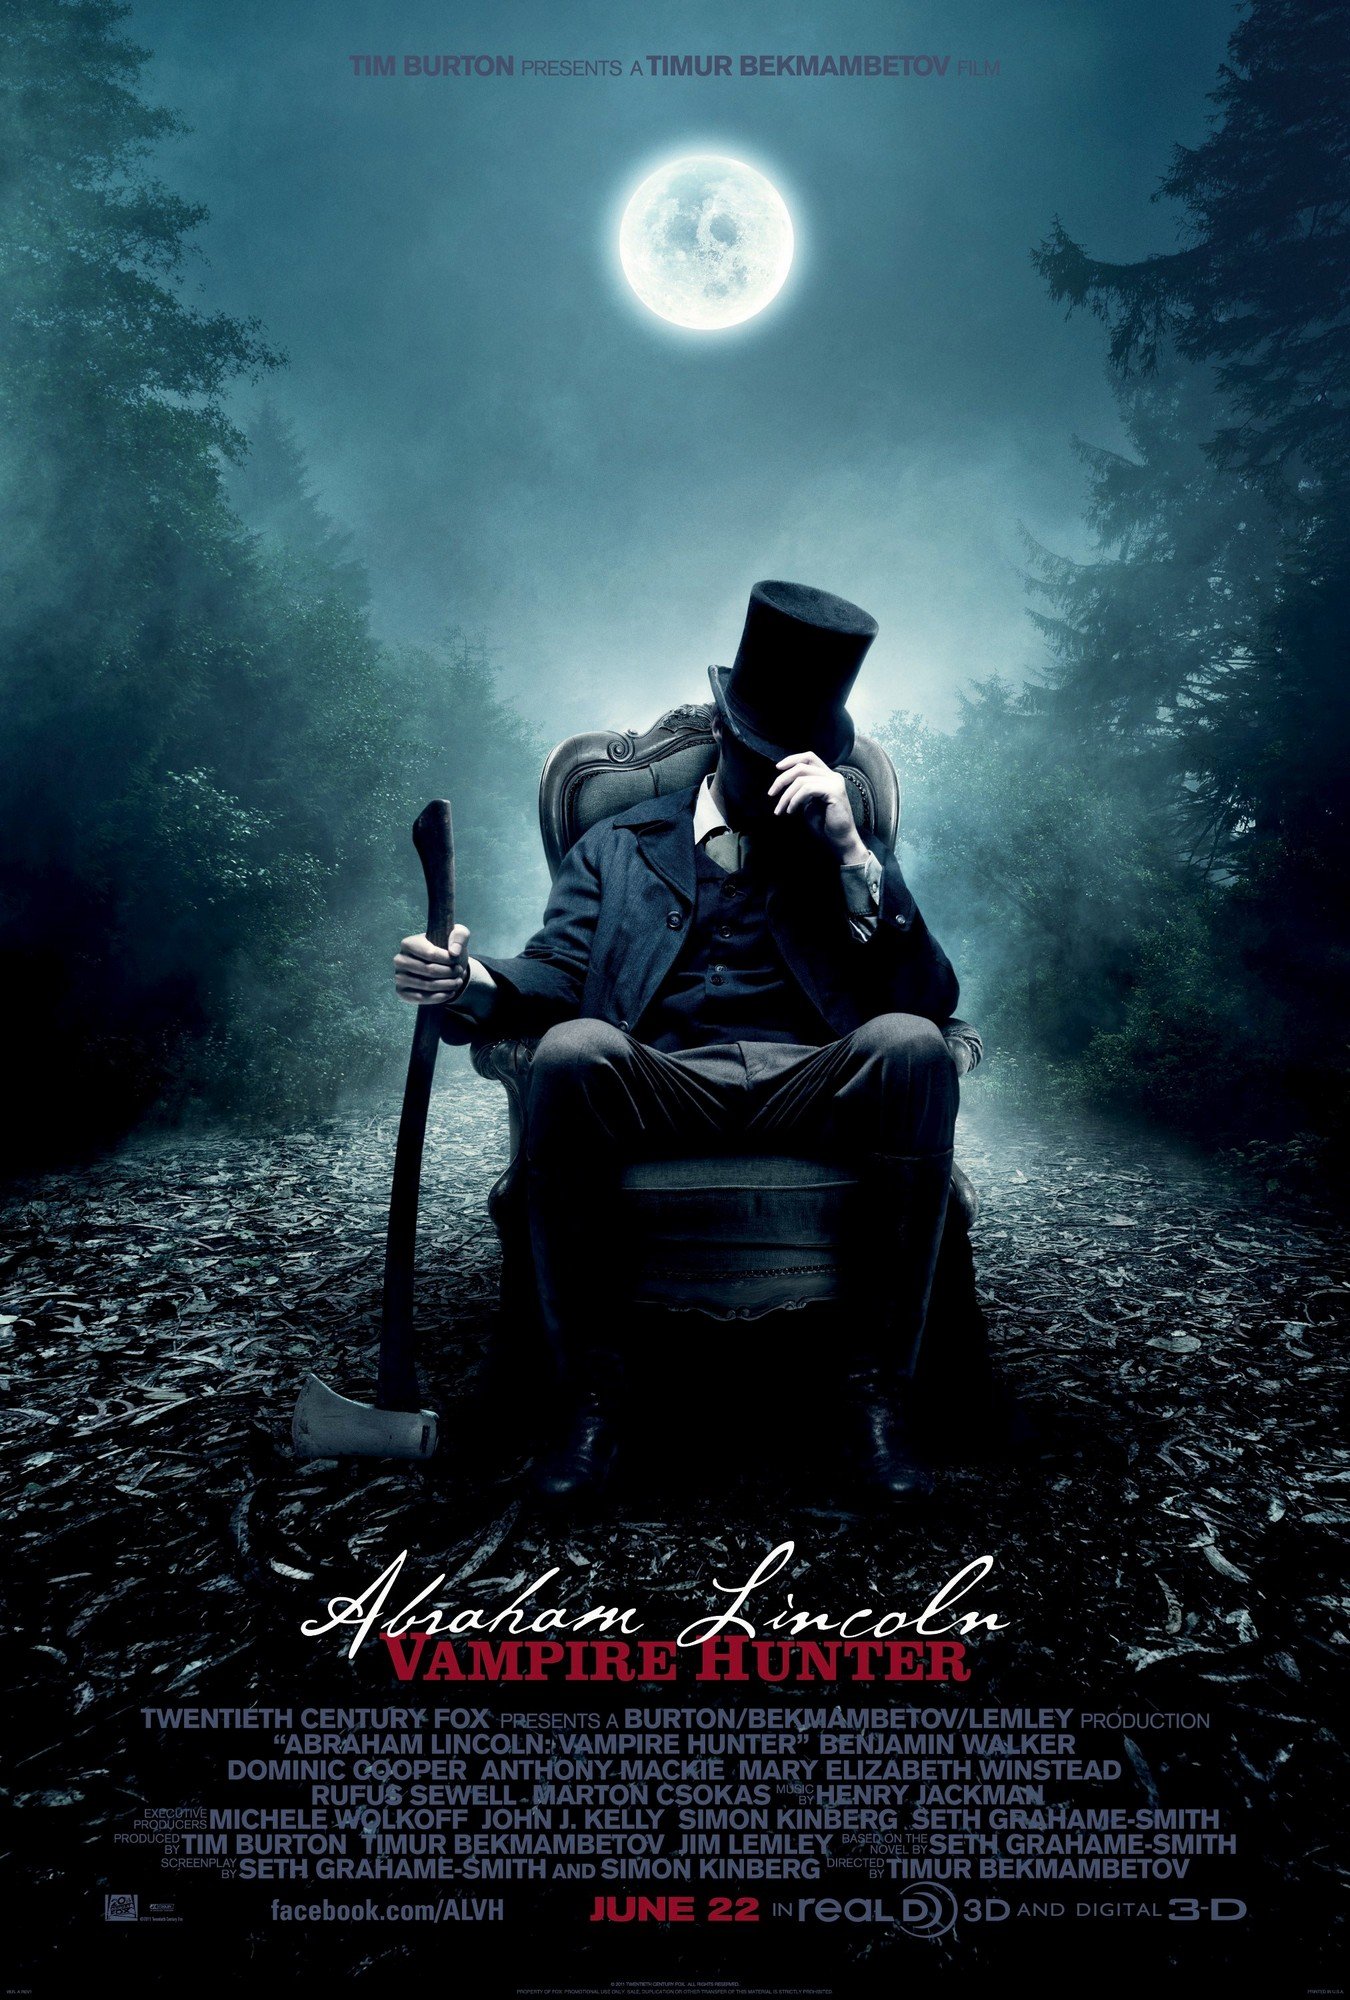 møbel indbildskhed Wetland Abraham Lincoln: Vampire Hunter | Tim Burton Wiki | Fandom